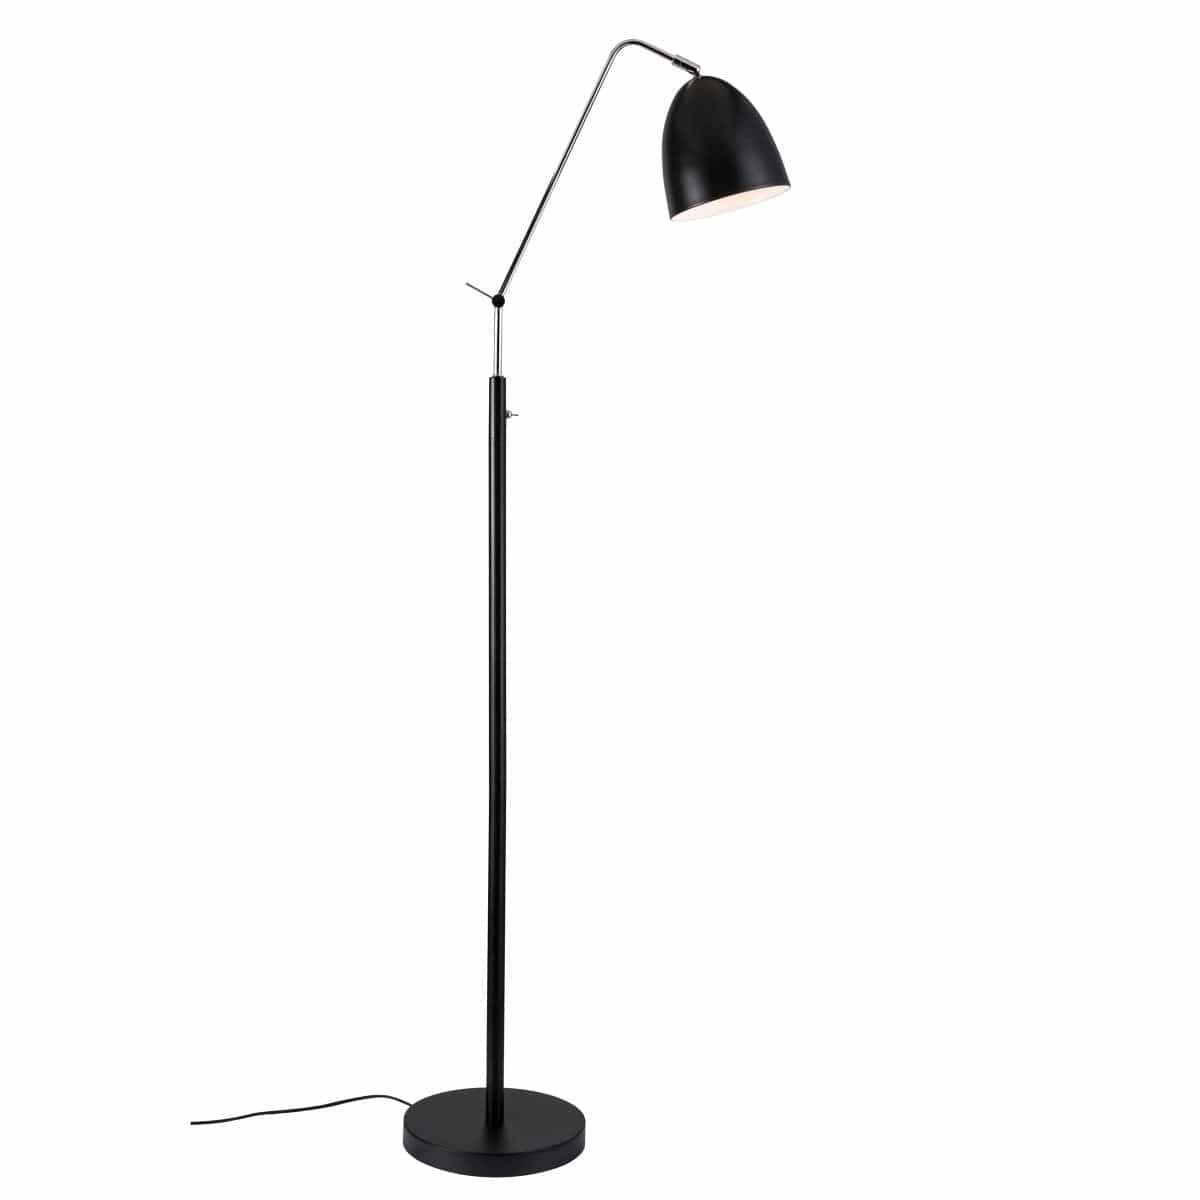 Nordlux Floor Lamp Alexander Floor Lamp, black or white